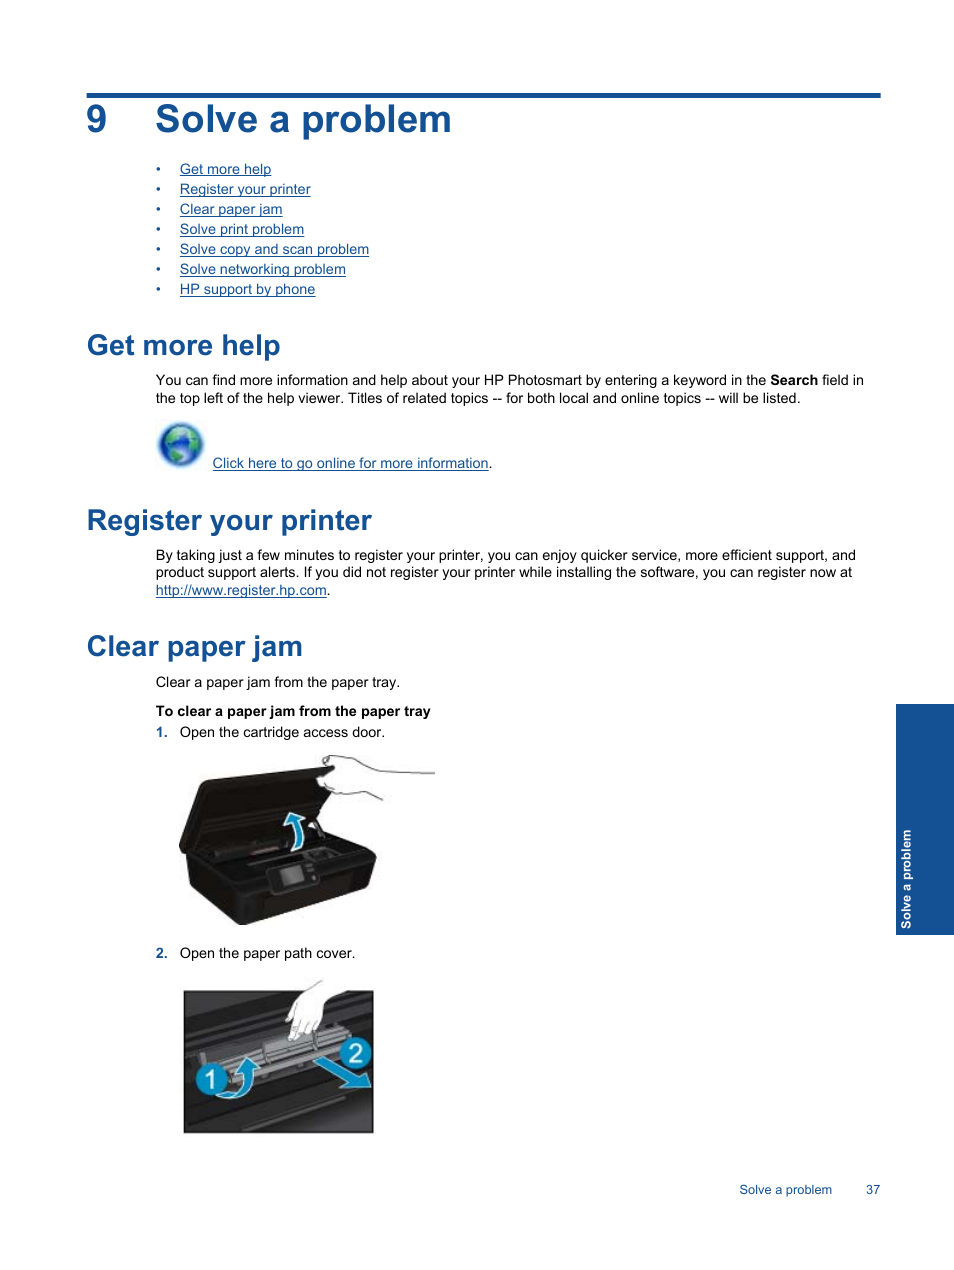 Solve a problem, Get more help, Register your printer | HP 5520 User